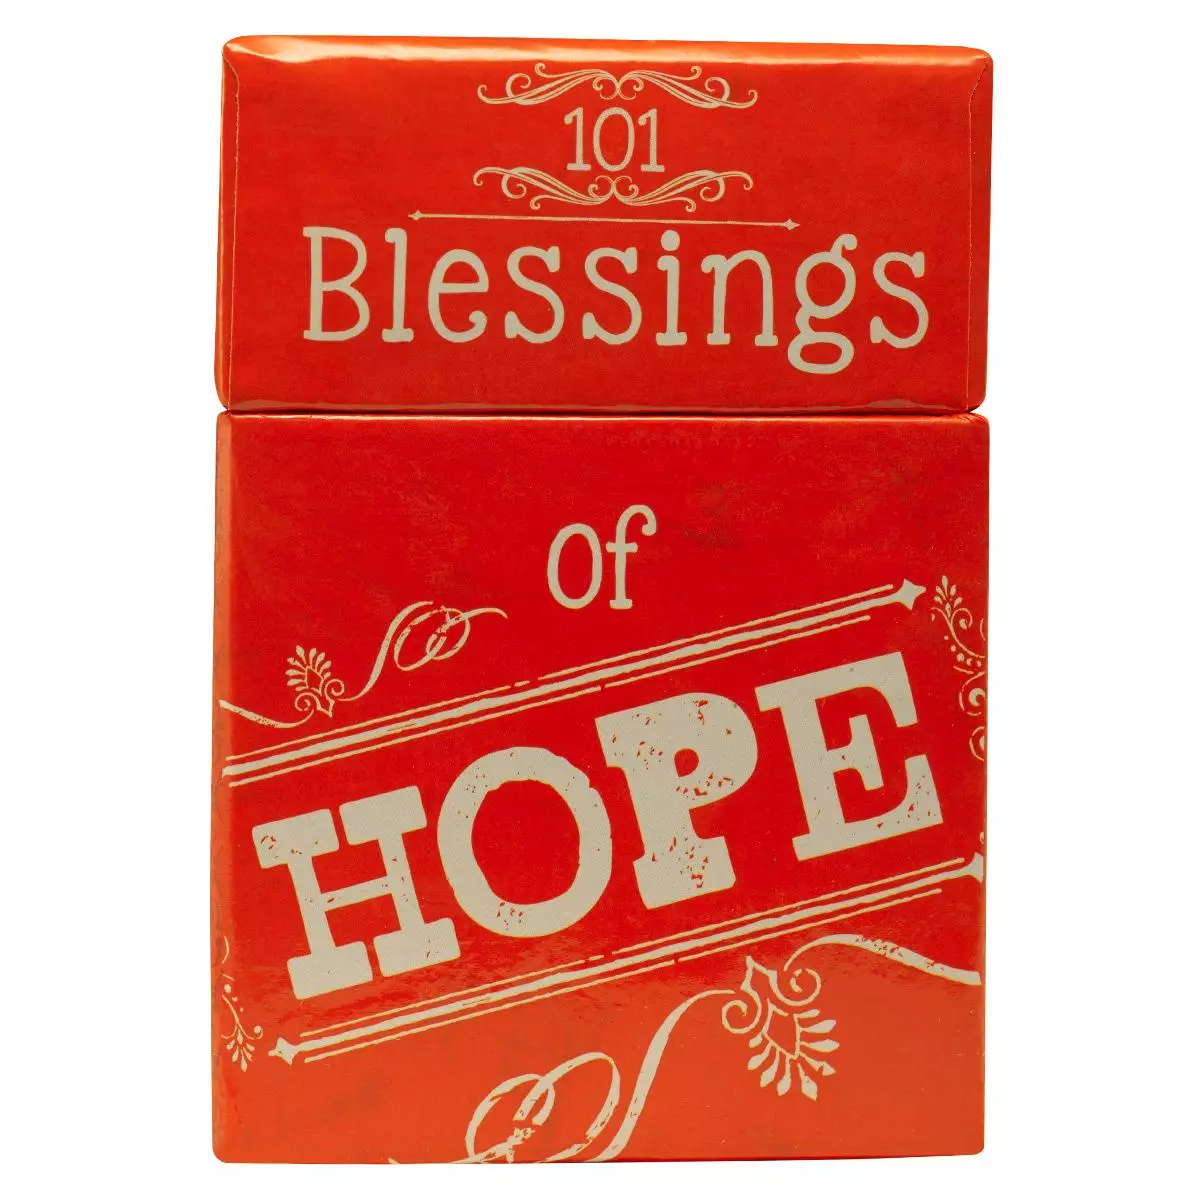 Box of Blessings of Hope